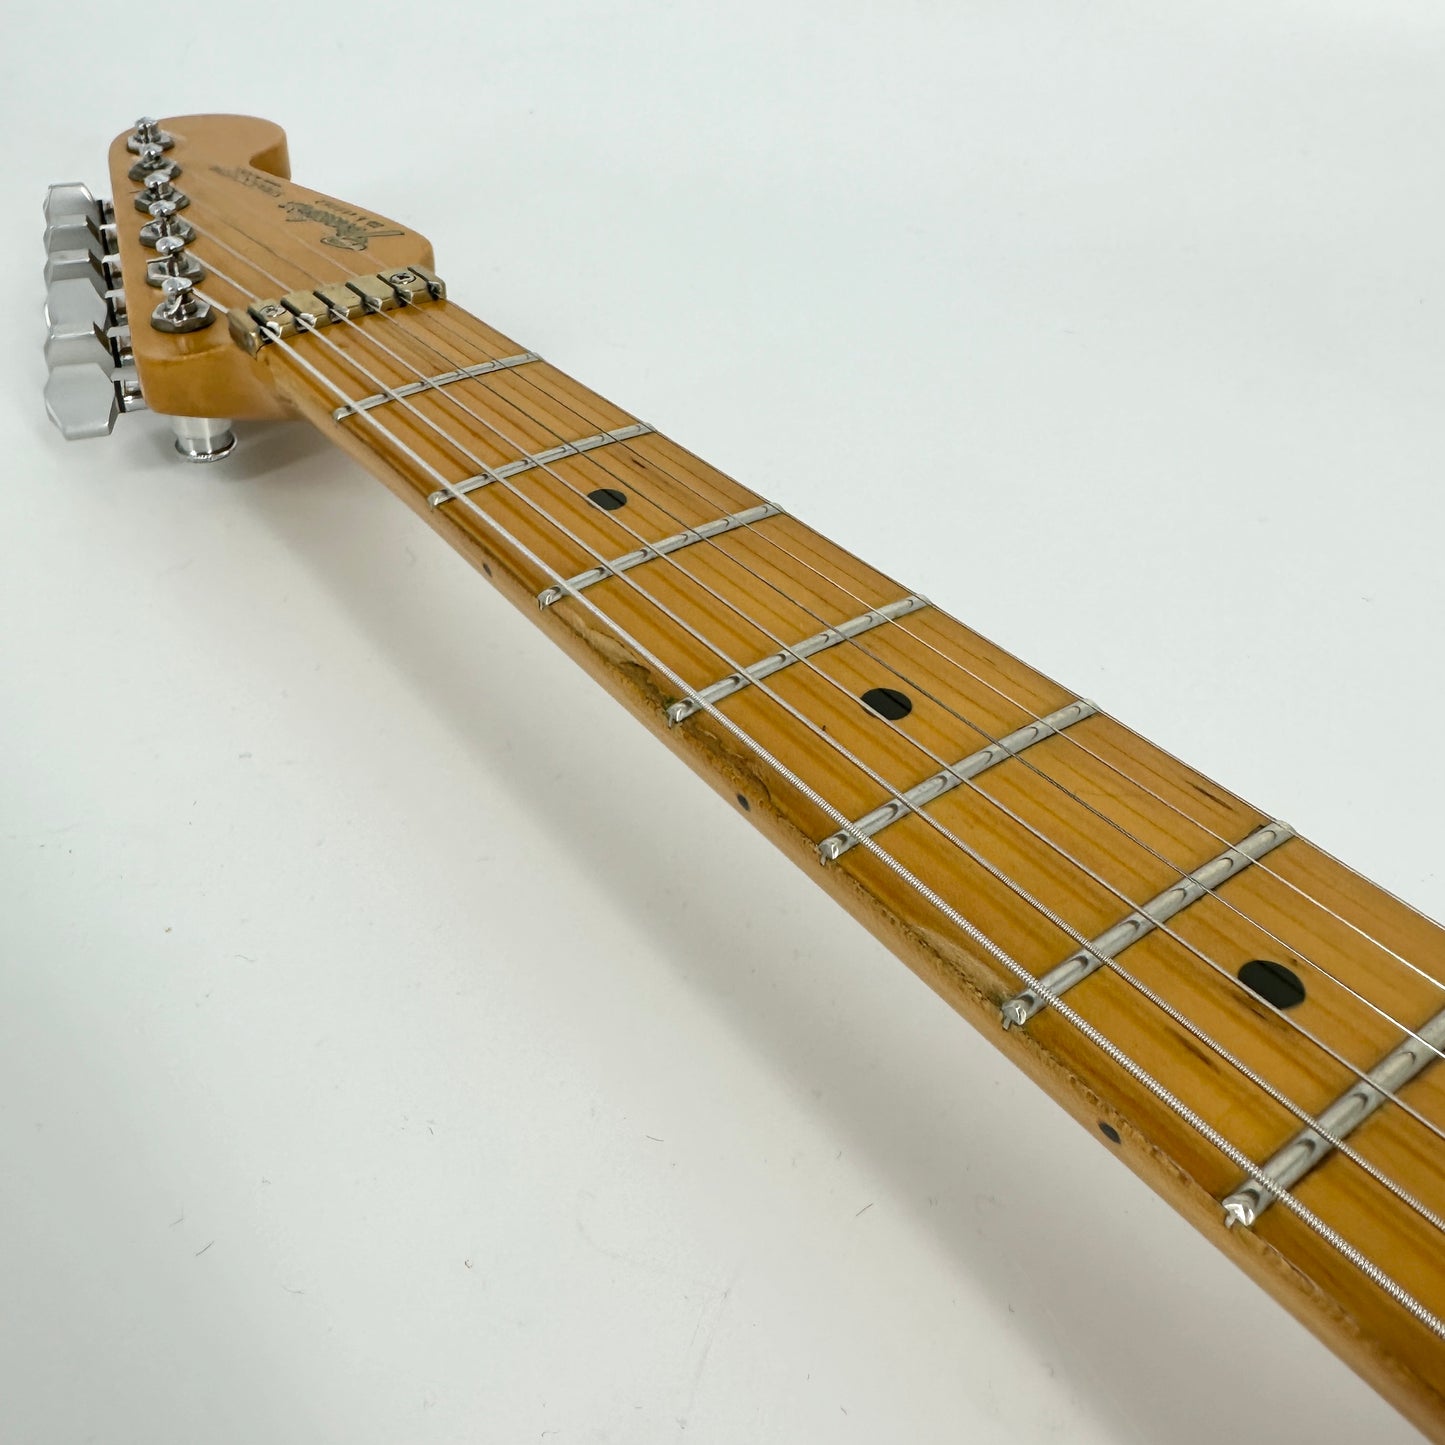 1987 Fender Strat Plus - Pewter